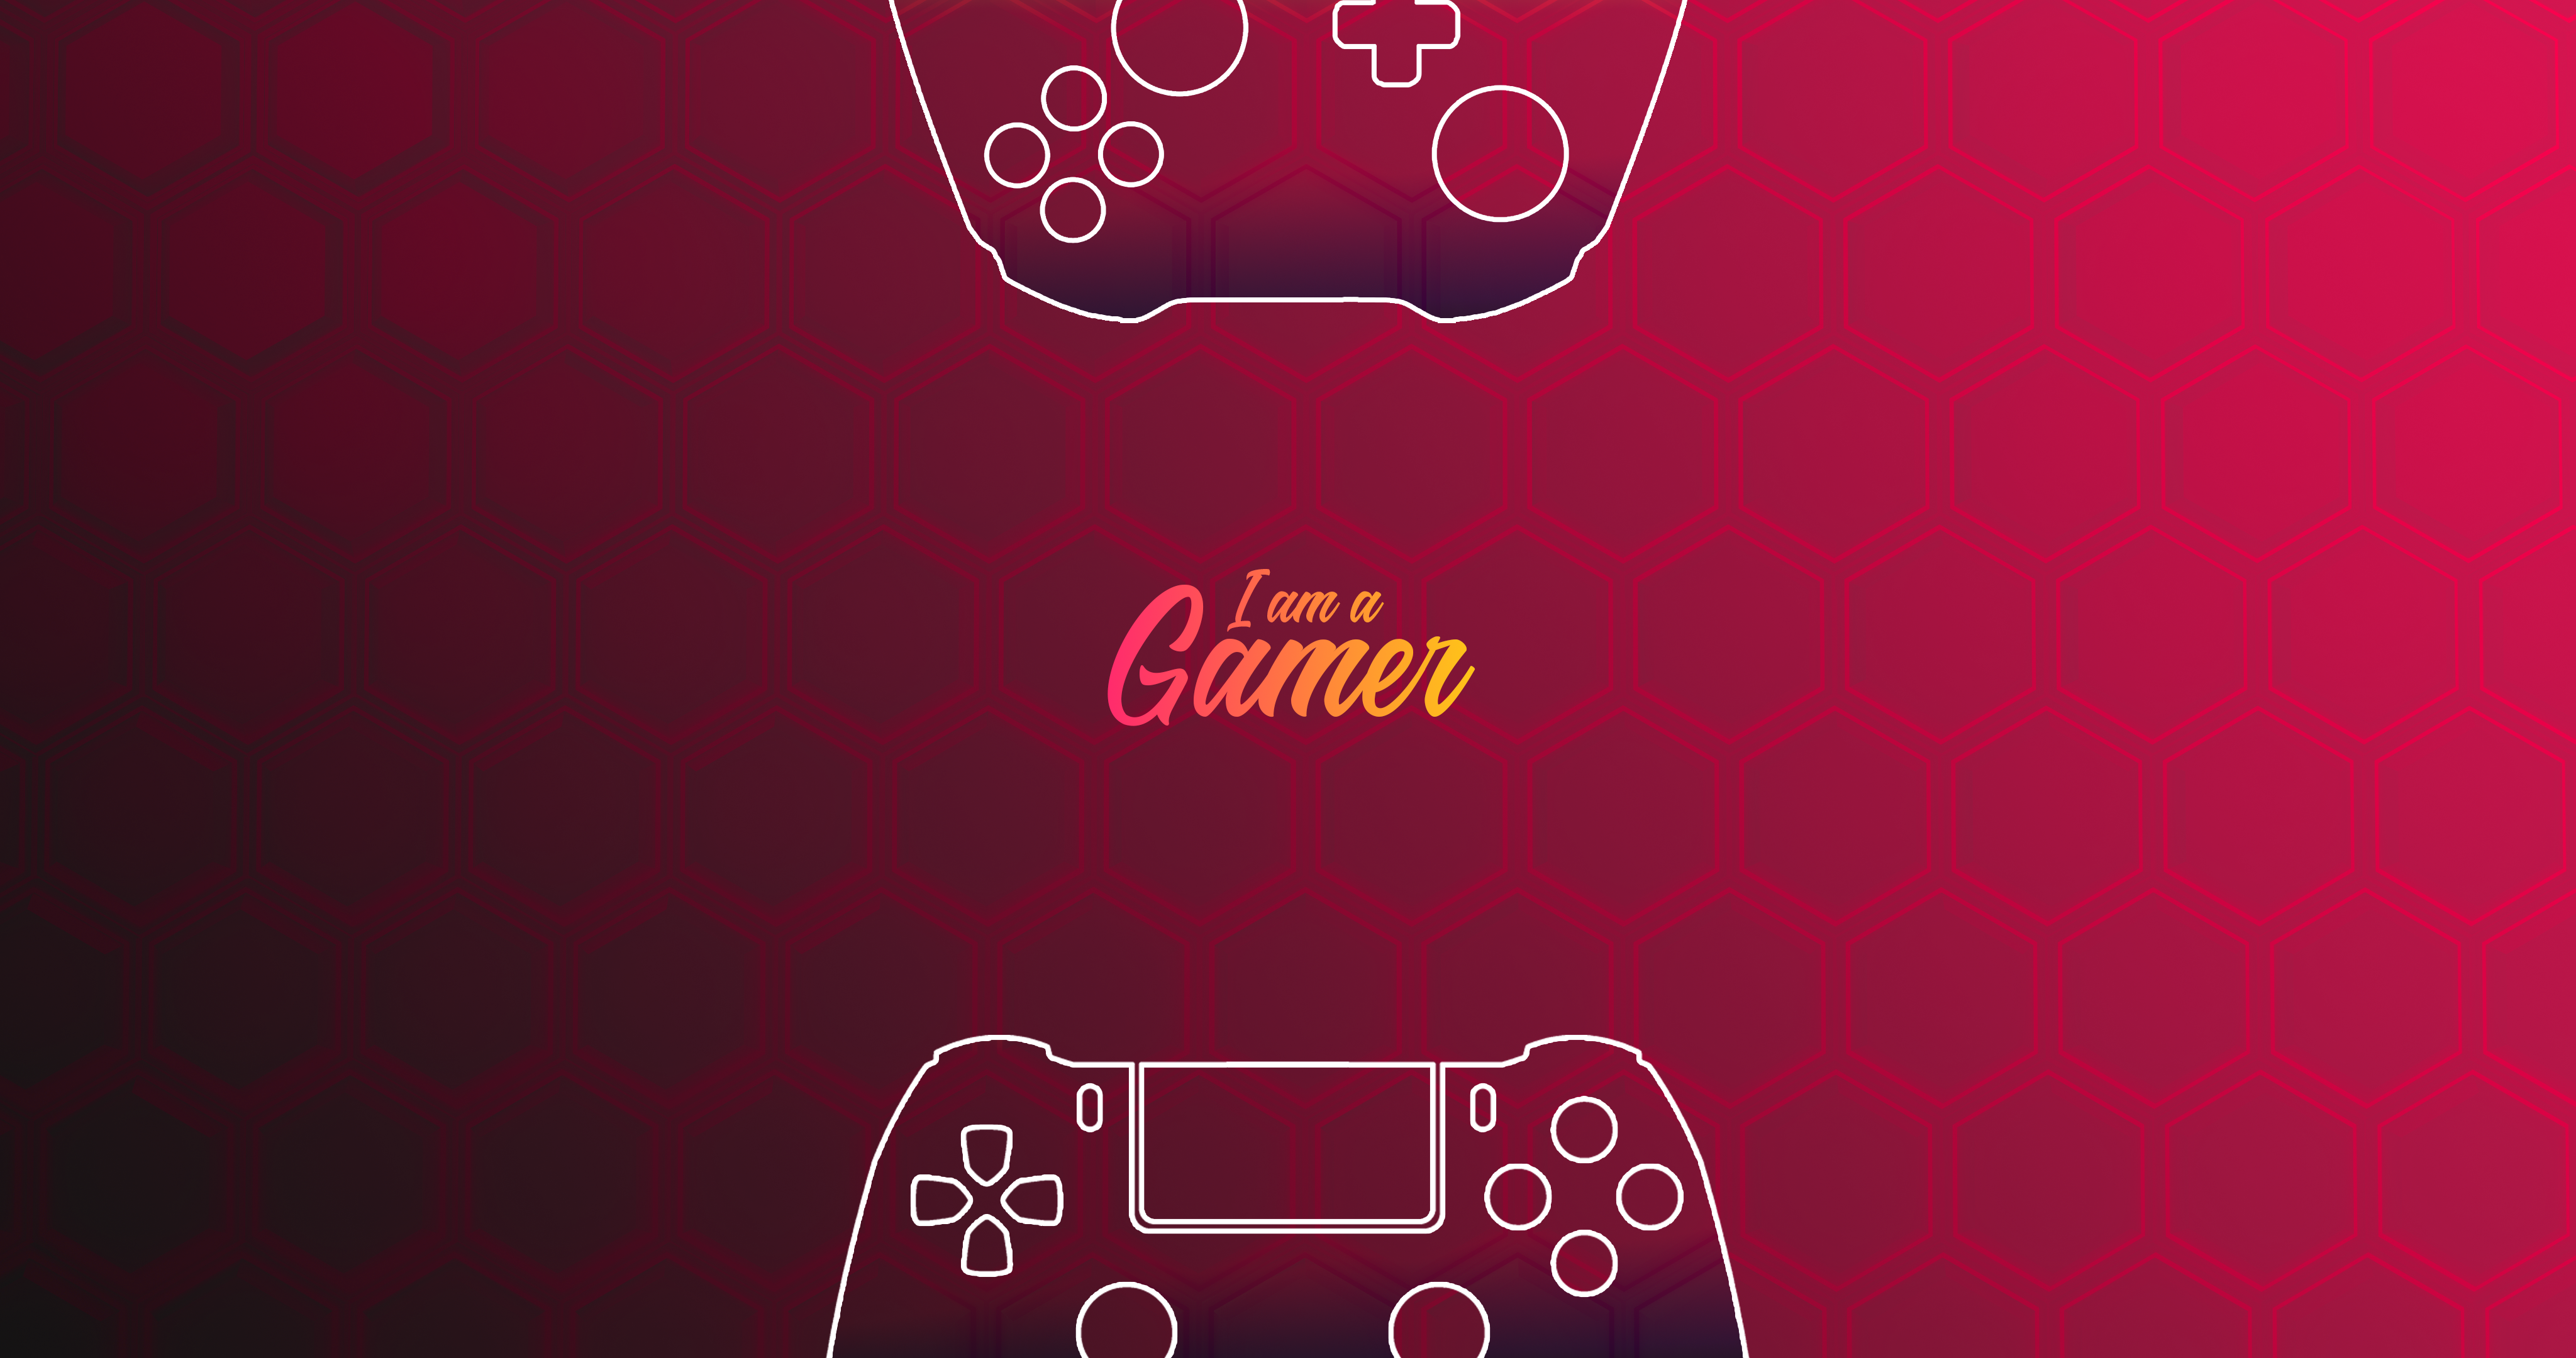 I am a Gamer (Girl) 4k Ultra HD Wallpaper. Background Image